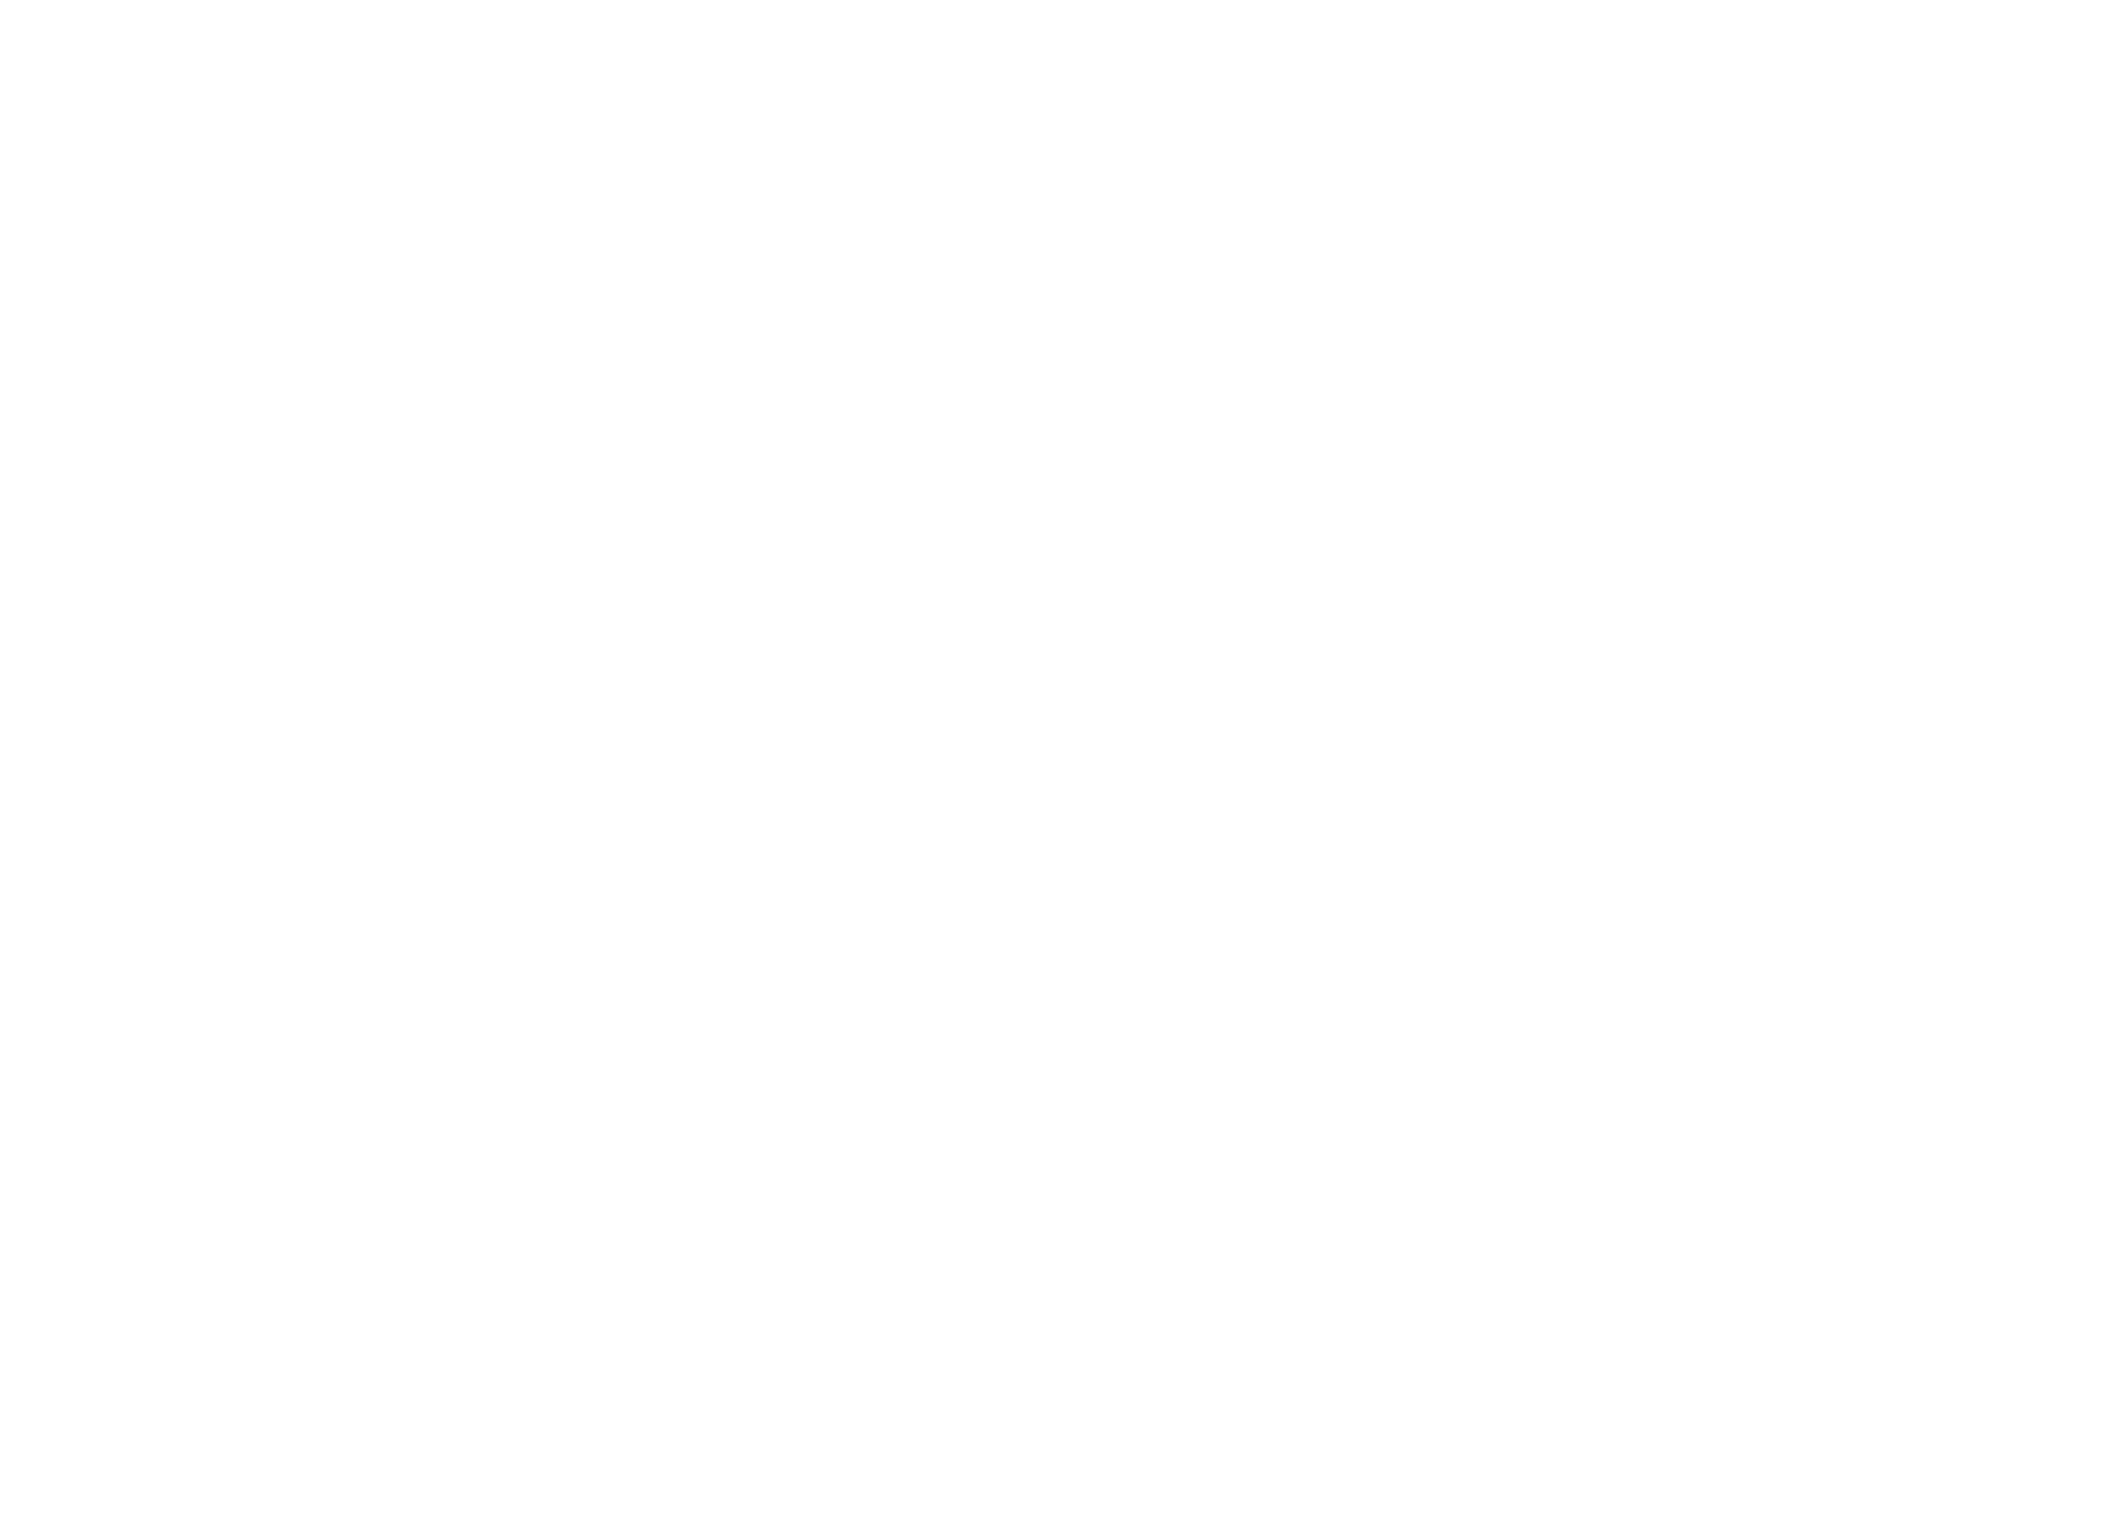 2022_RIDM_Lauriers_Compet Nat Longs (blanc).png